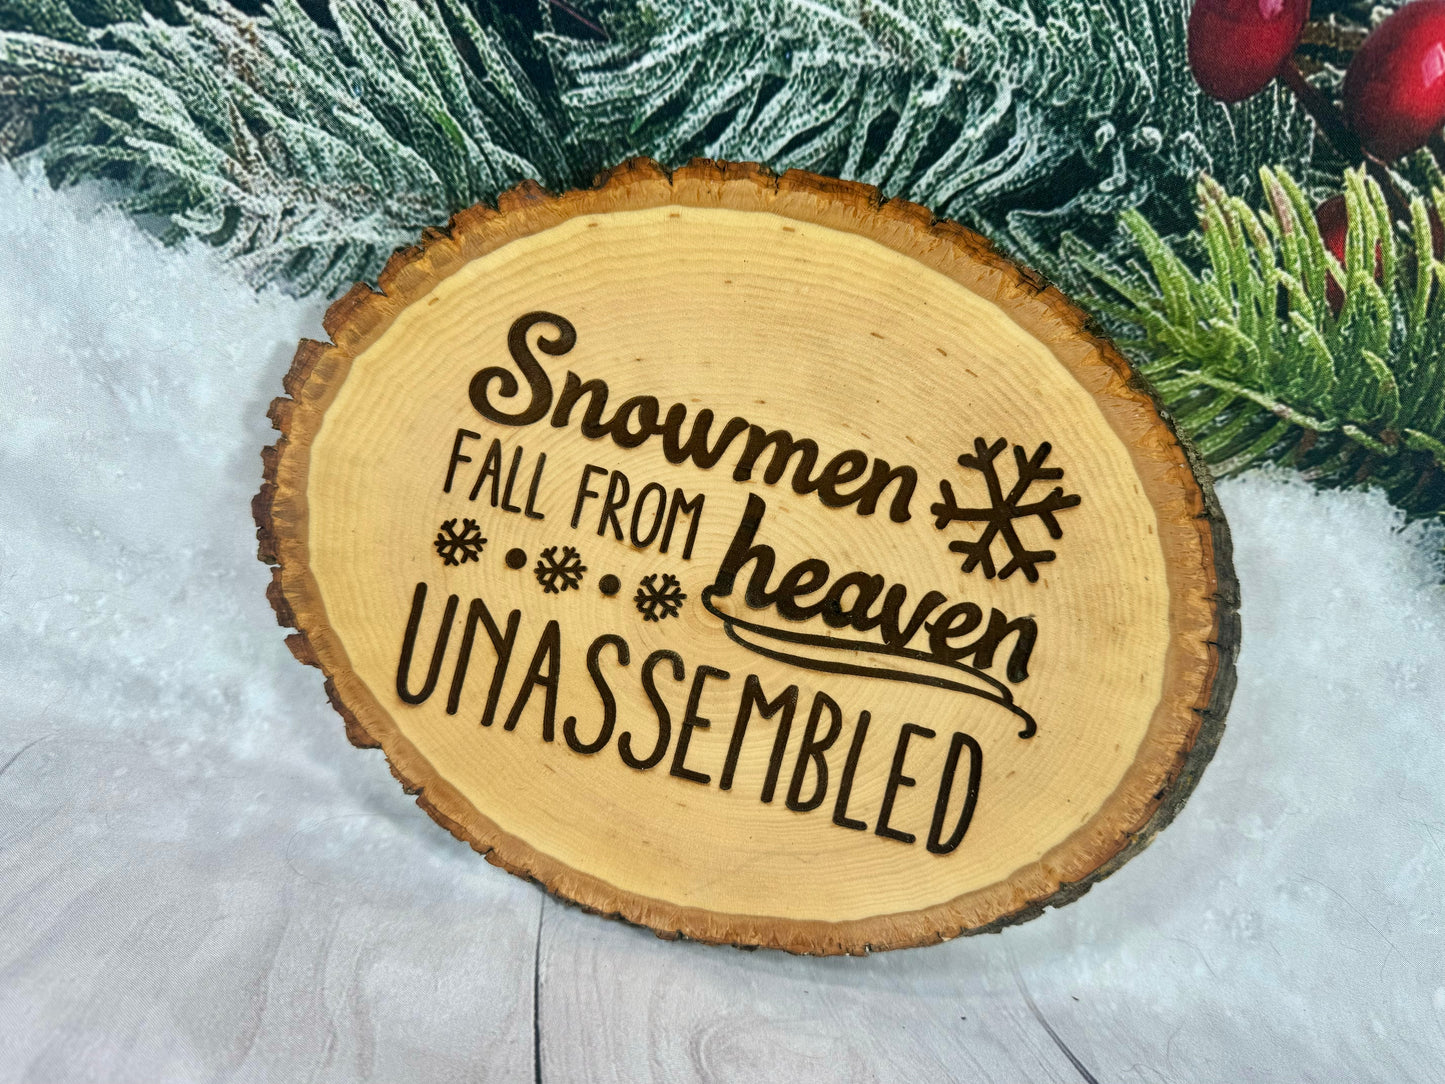 Snowman Fall From Heaven Unassembled Live Edge Wood Signn